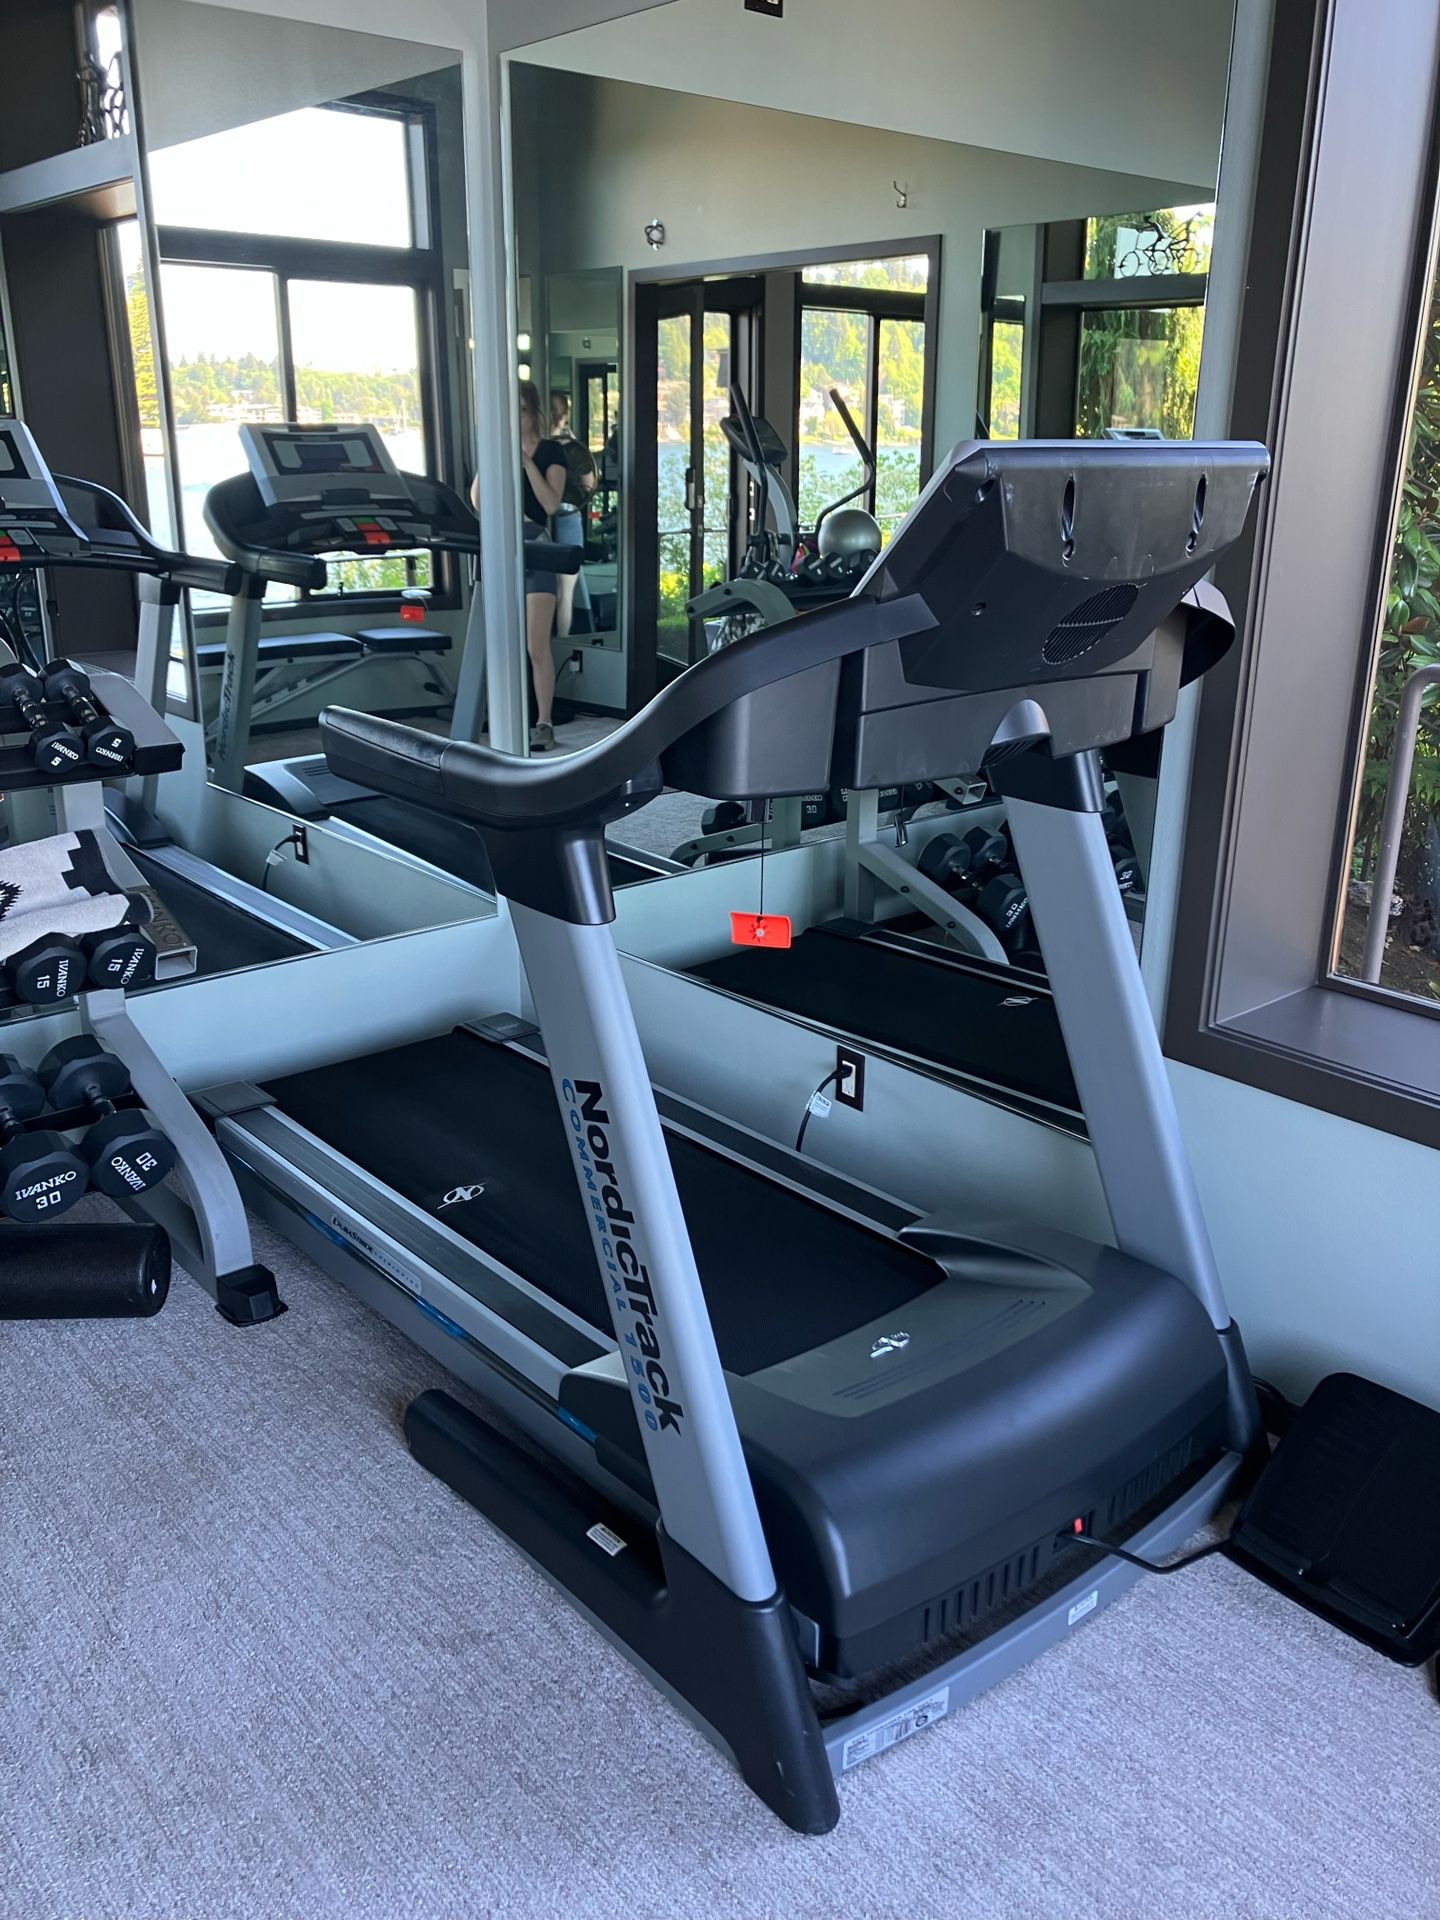 NordicTrack Treadmill & Life Fitness elliptical